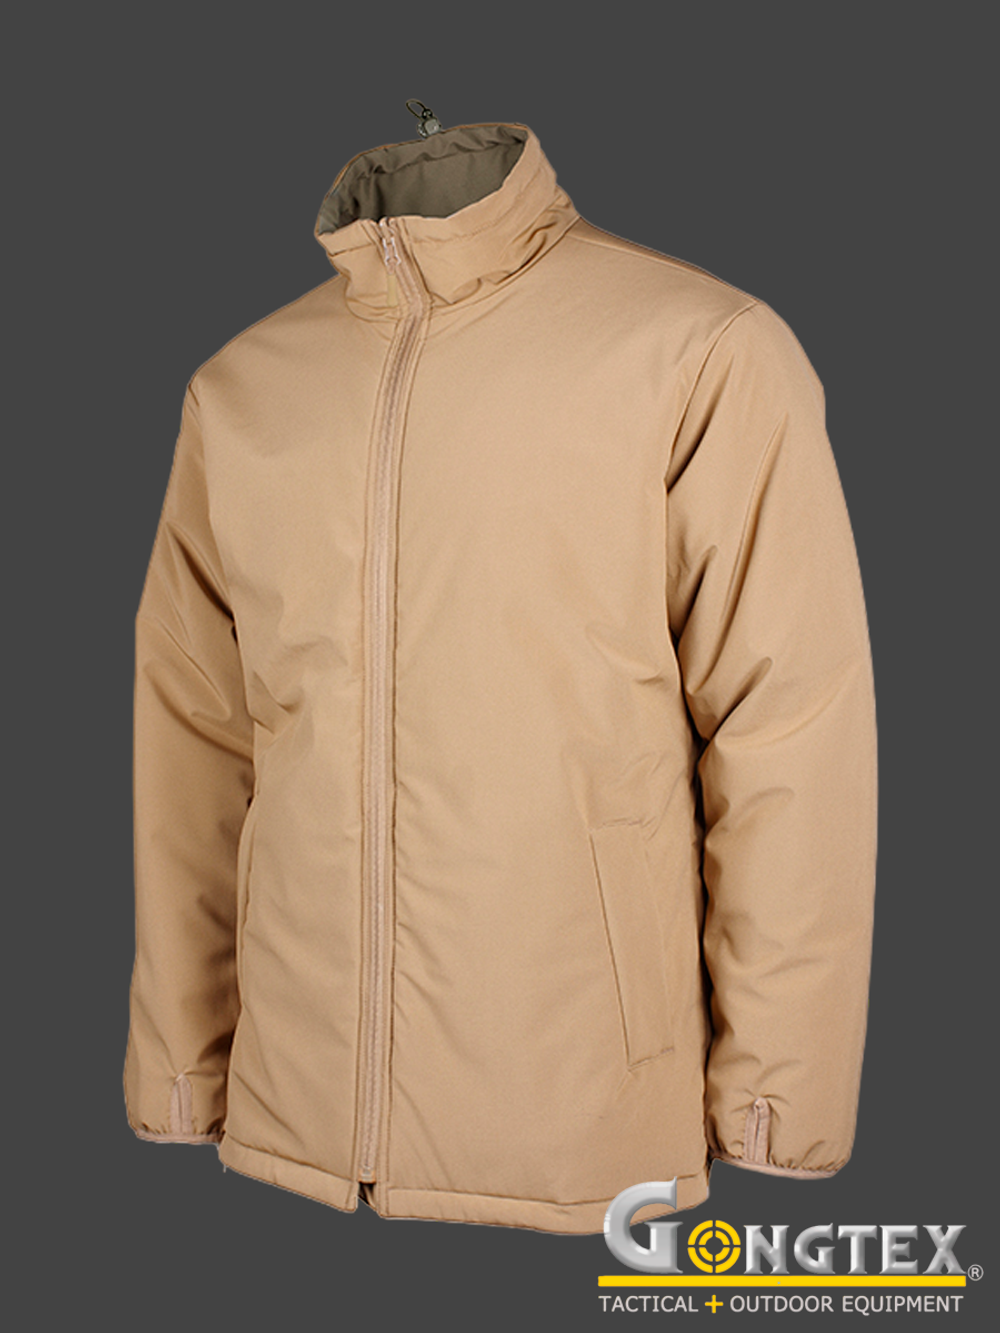 Куртка двусторонняя L7 Gongtex Reversible Jacket. Койот/Олива